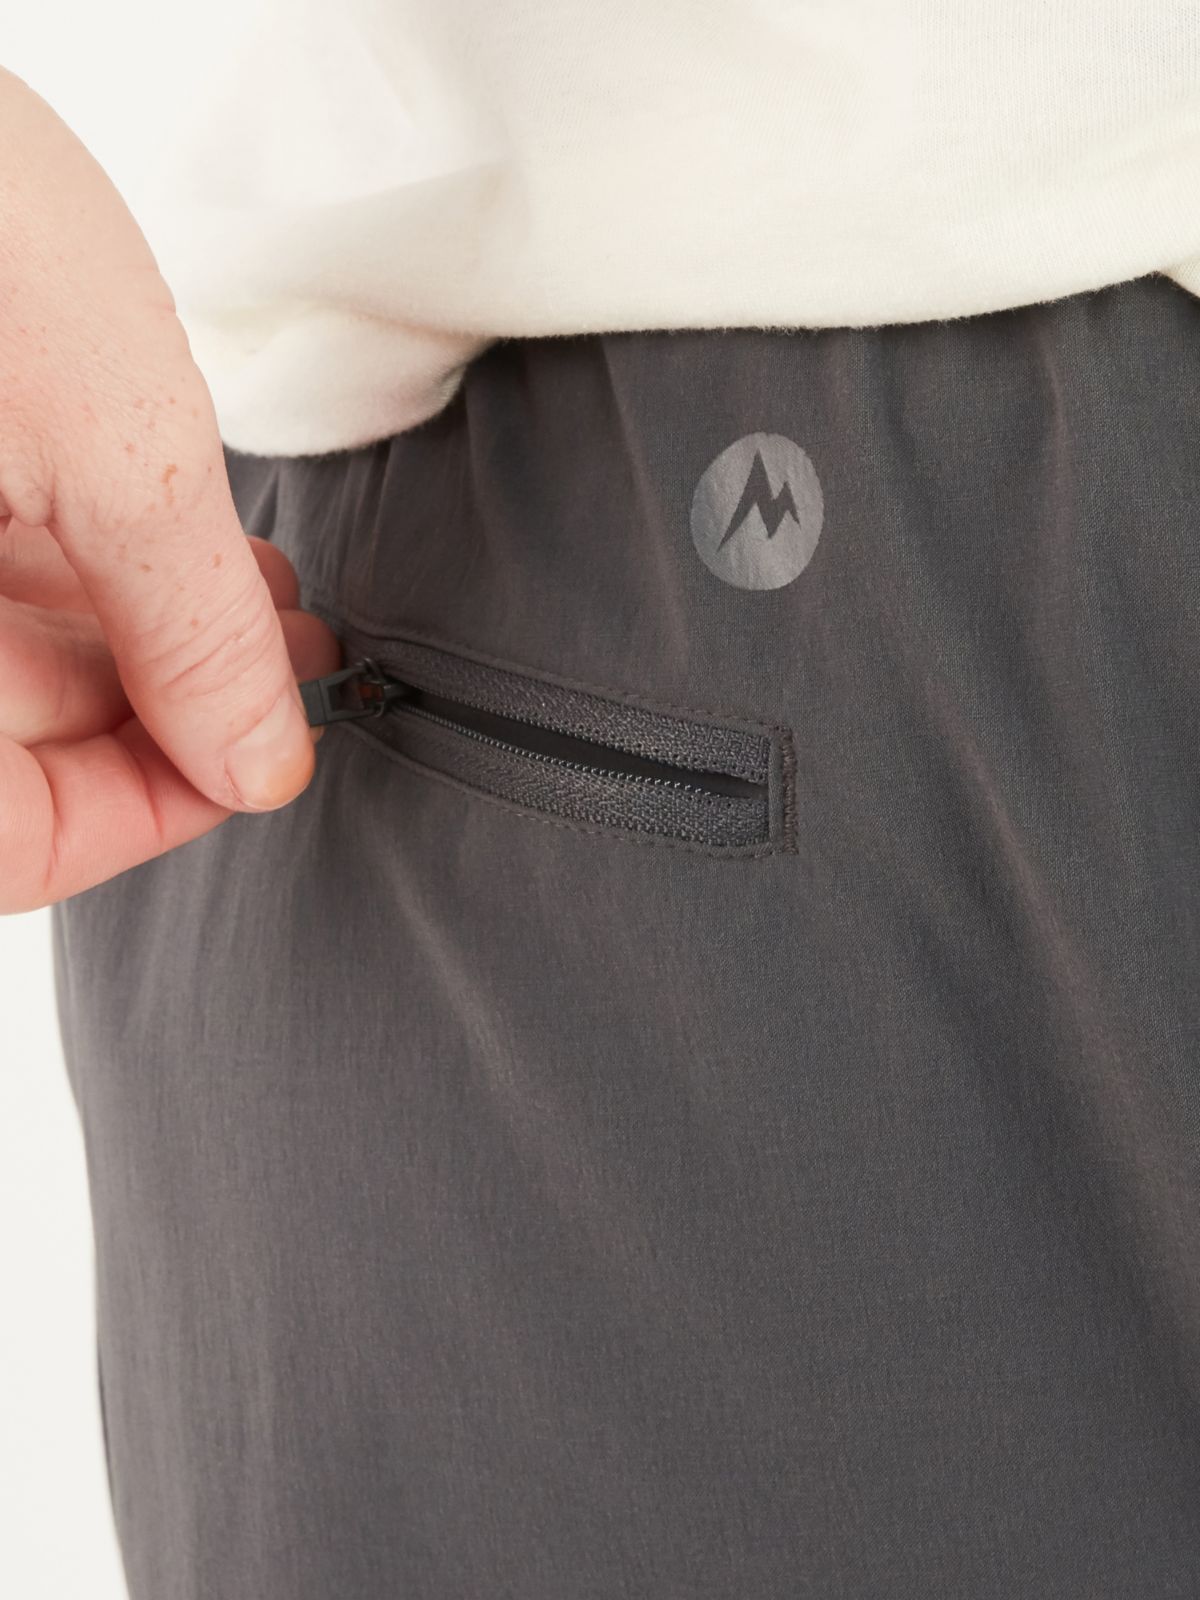 pants zipper pocket